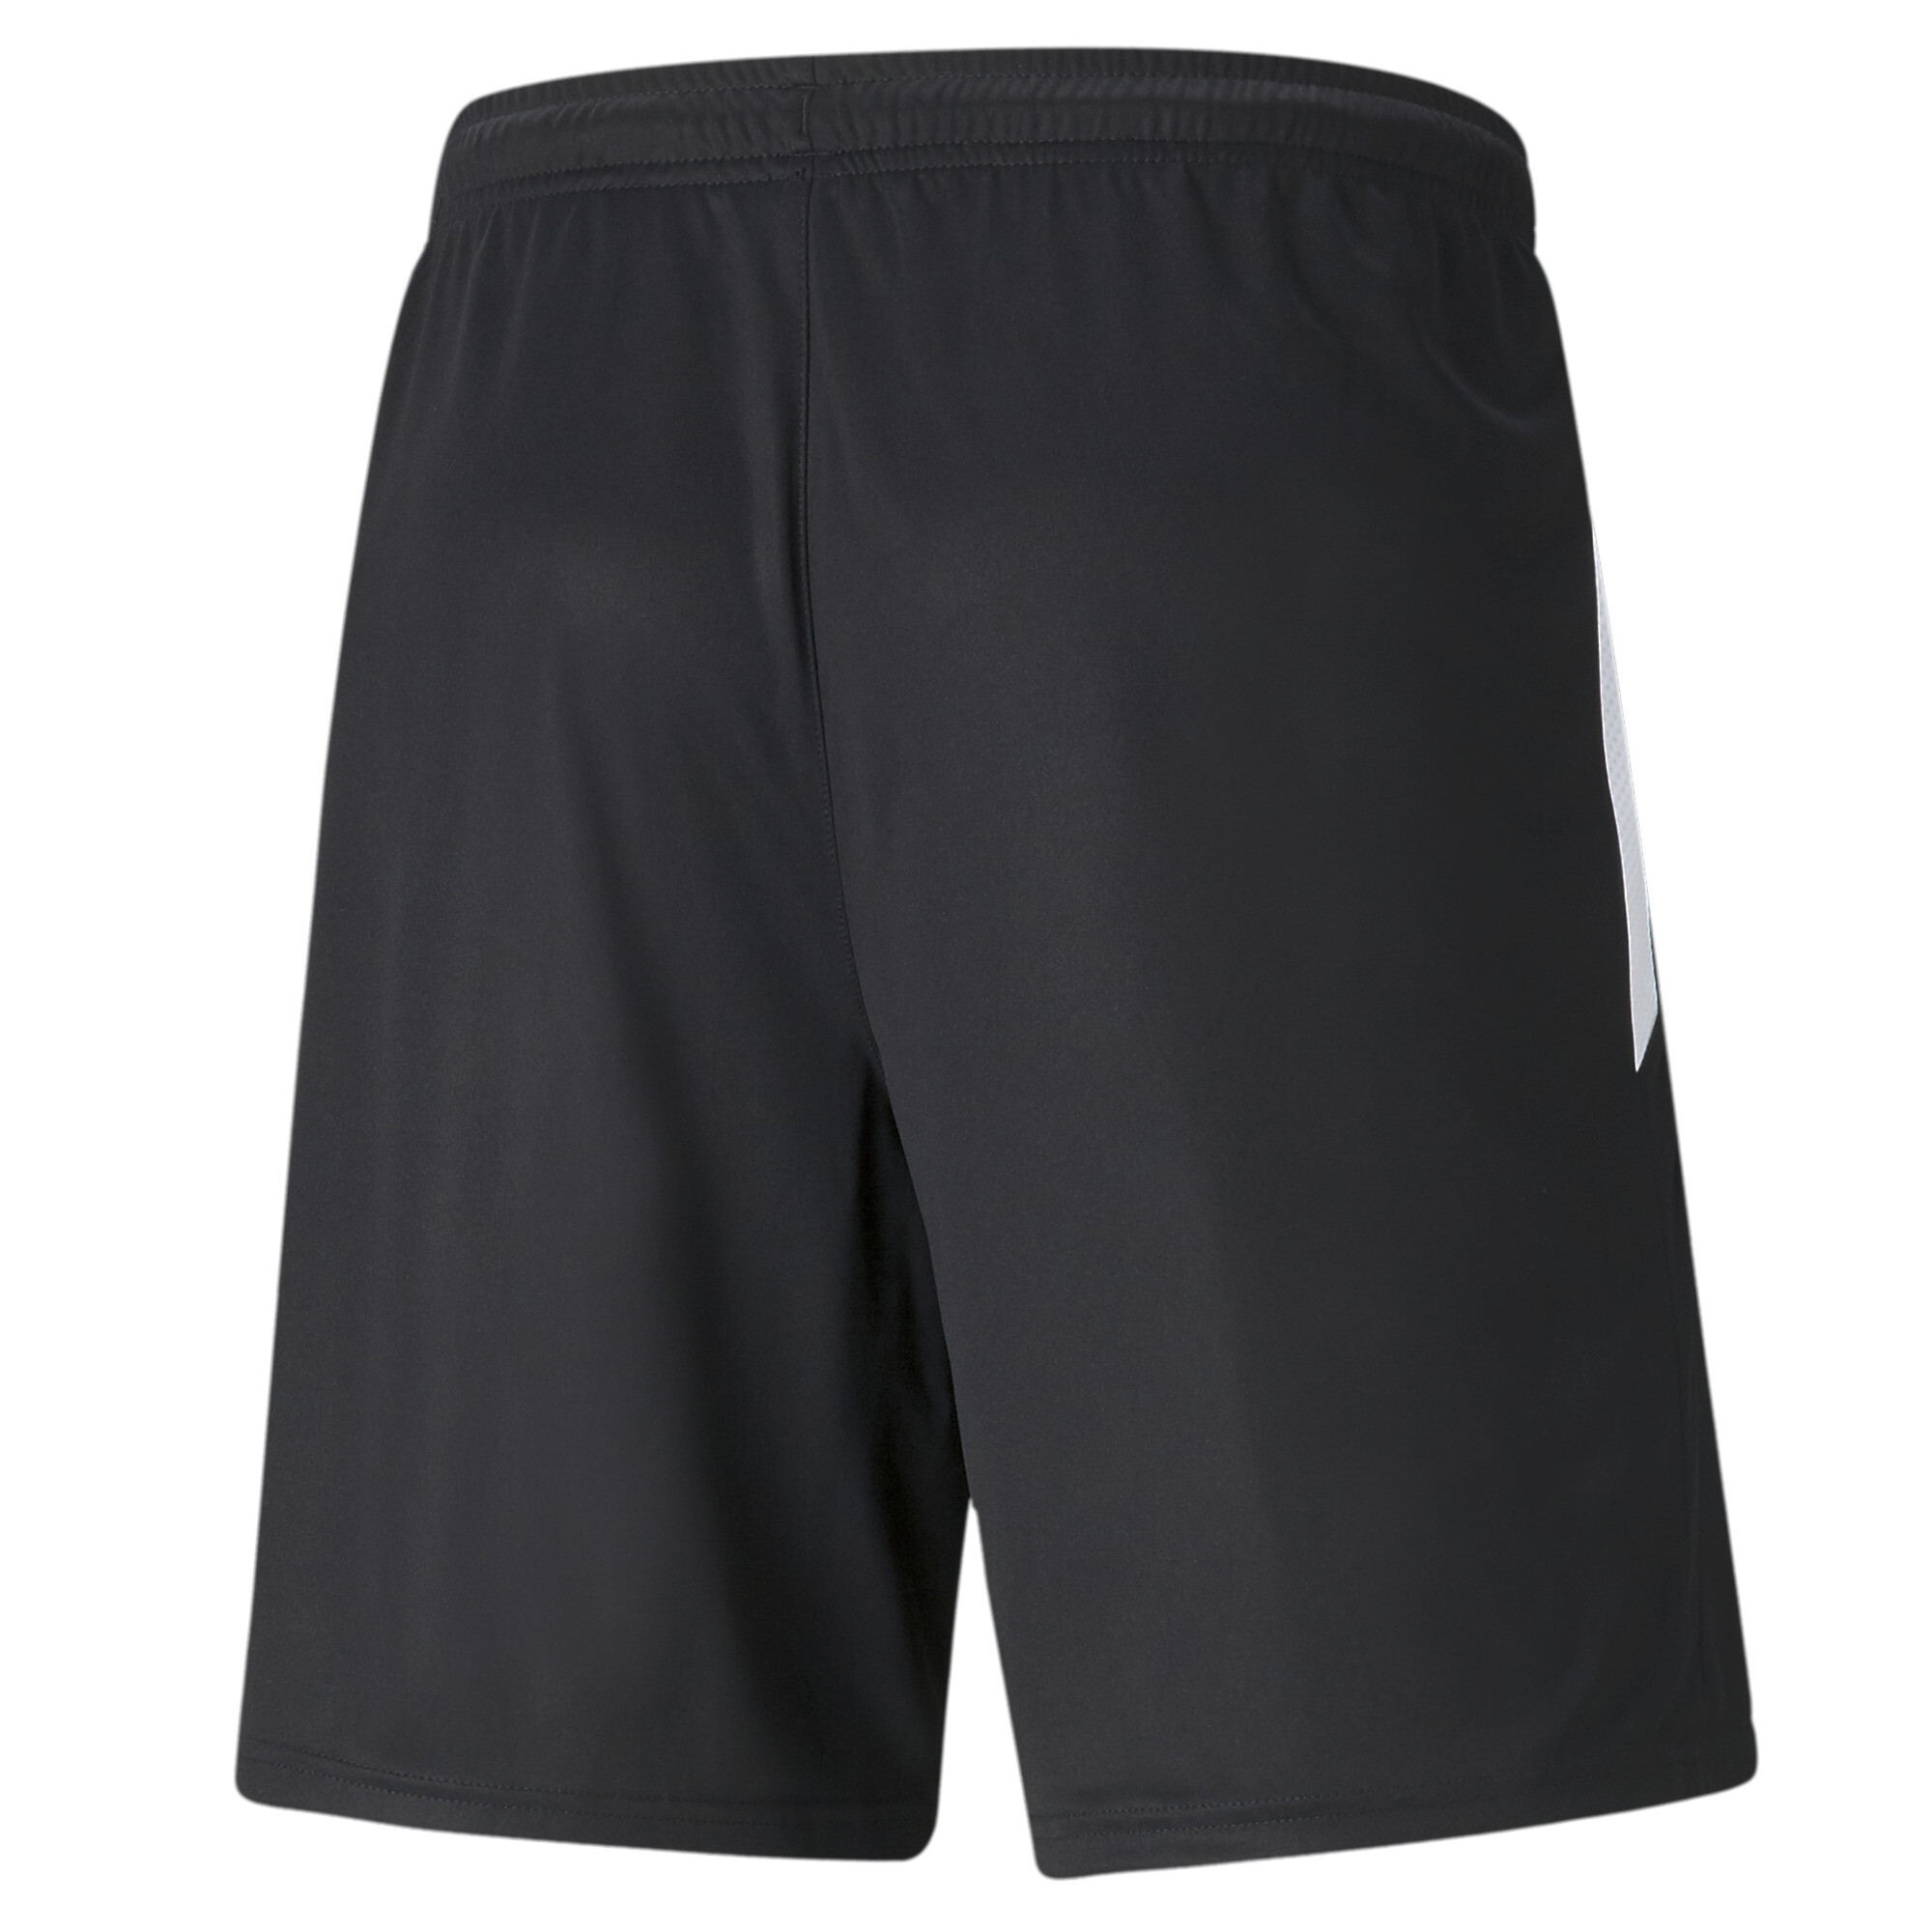 Men's Puma Team LIGA Training's Football Shorts, Black, Size S, Clothing